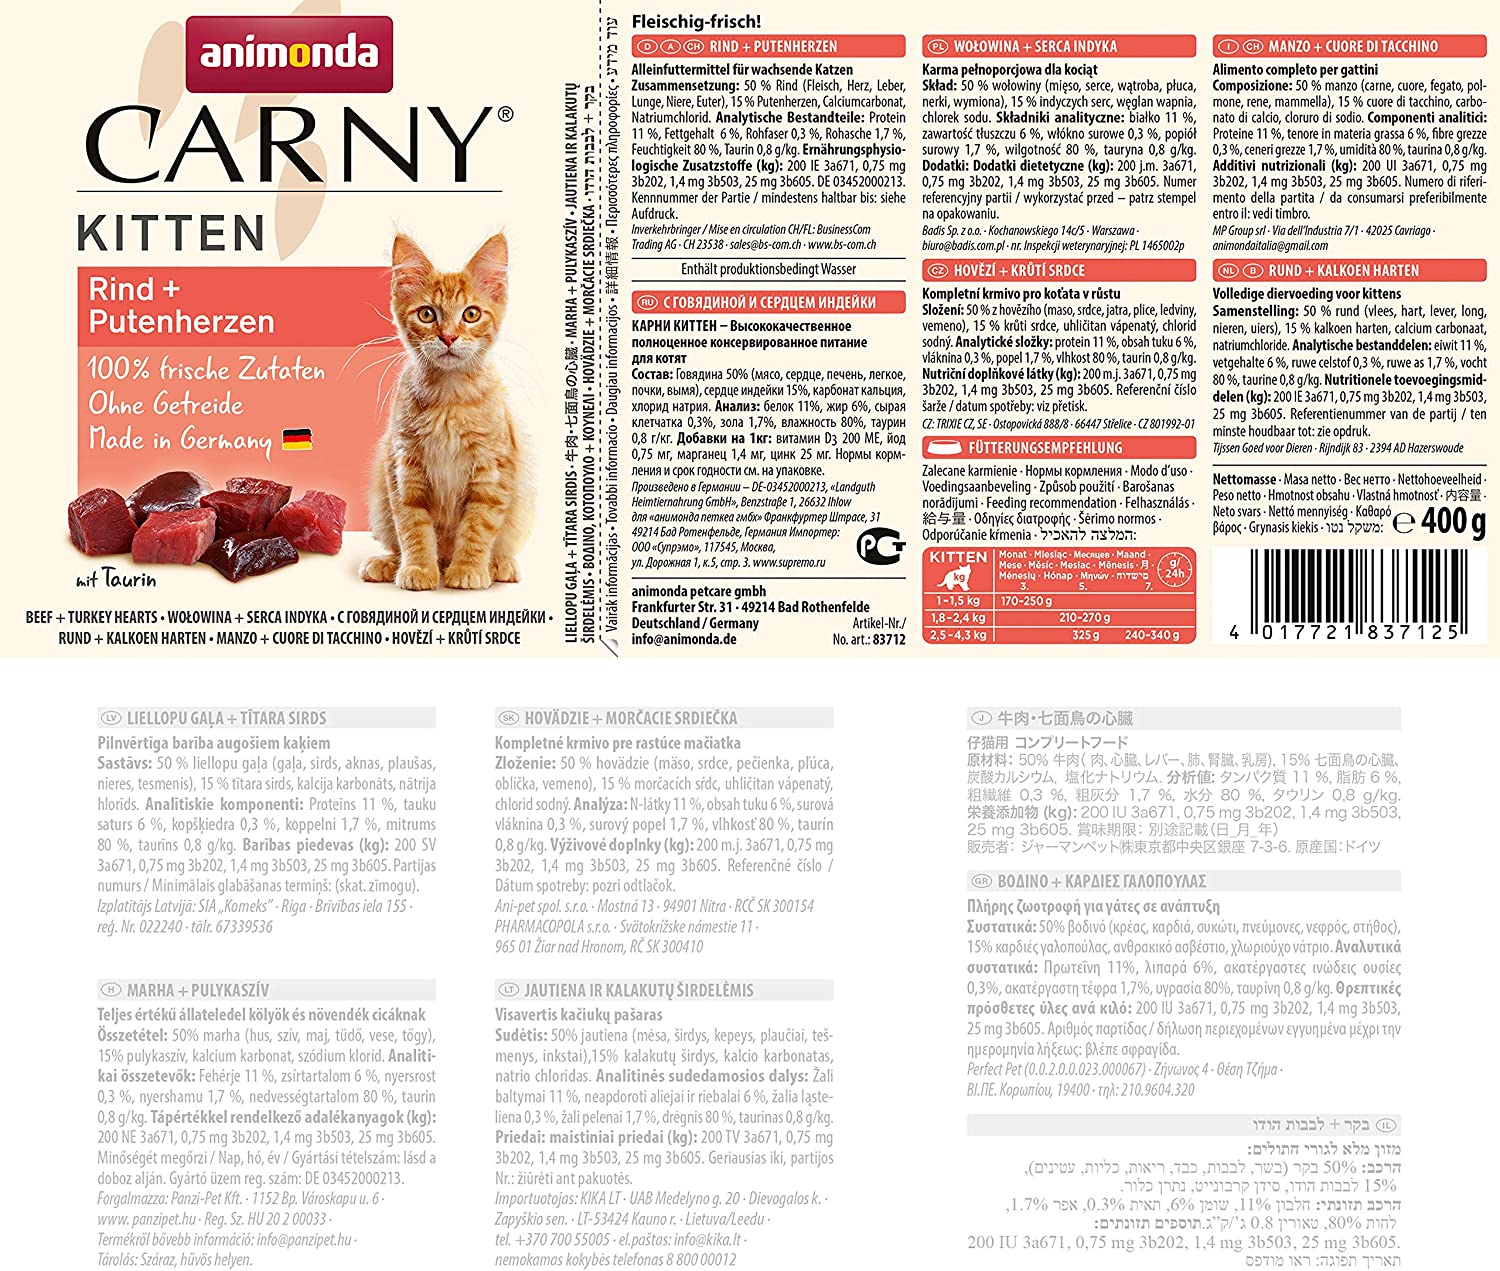  Animonda Carny Kitten Comida para gatos (12 x 200 g) 